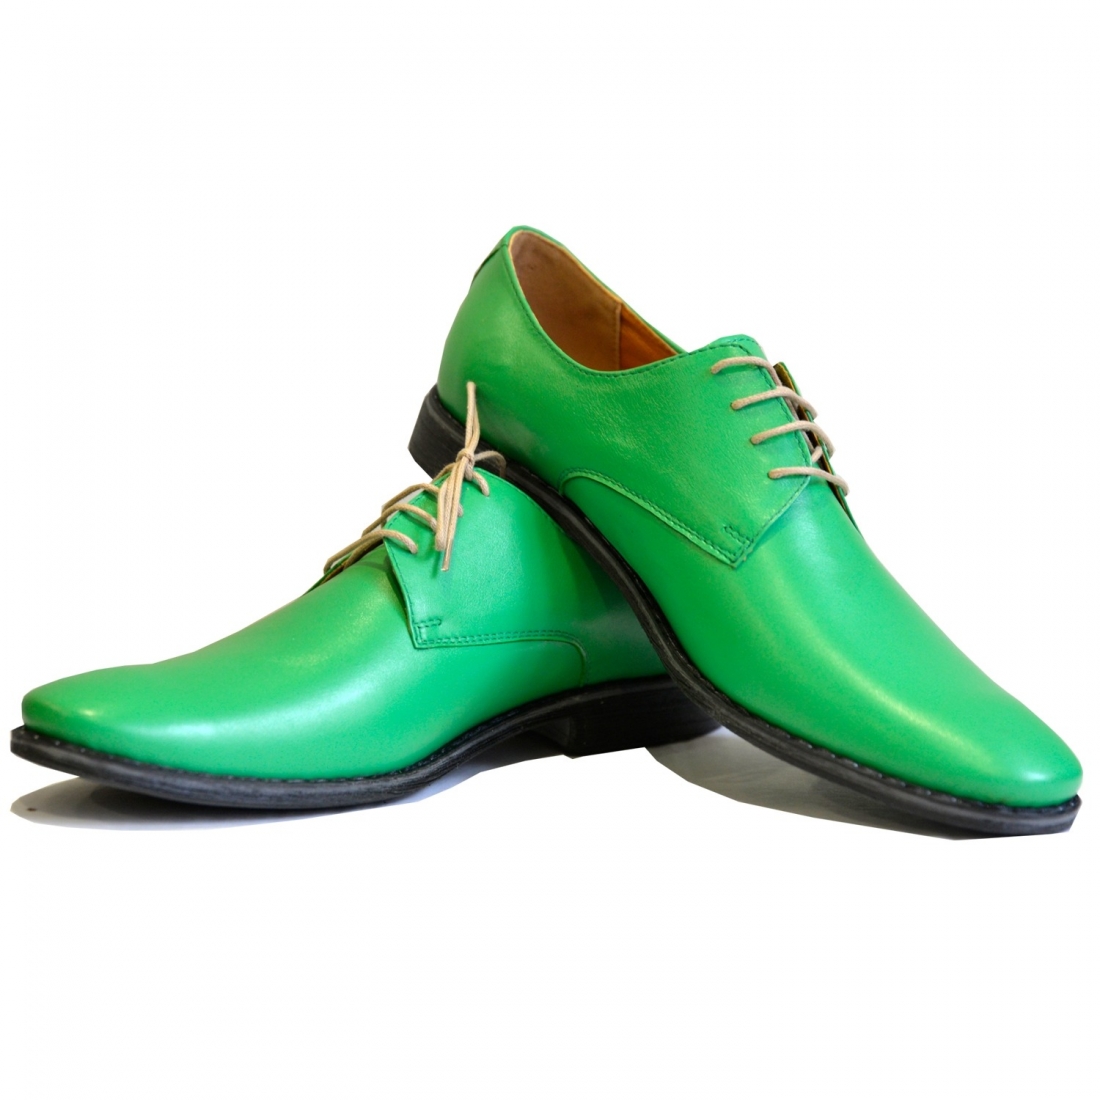 Modello Greanero - Chaussure Classique - Handmade Colorful Italian Leather Shoes